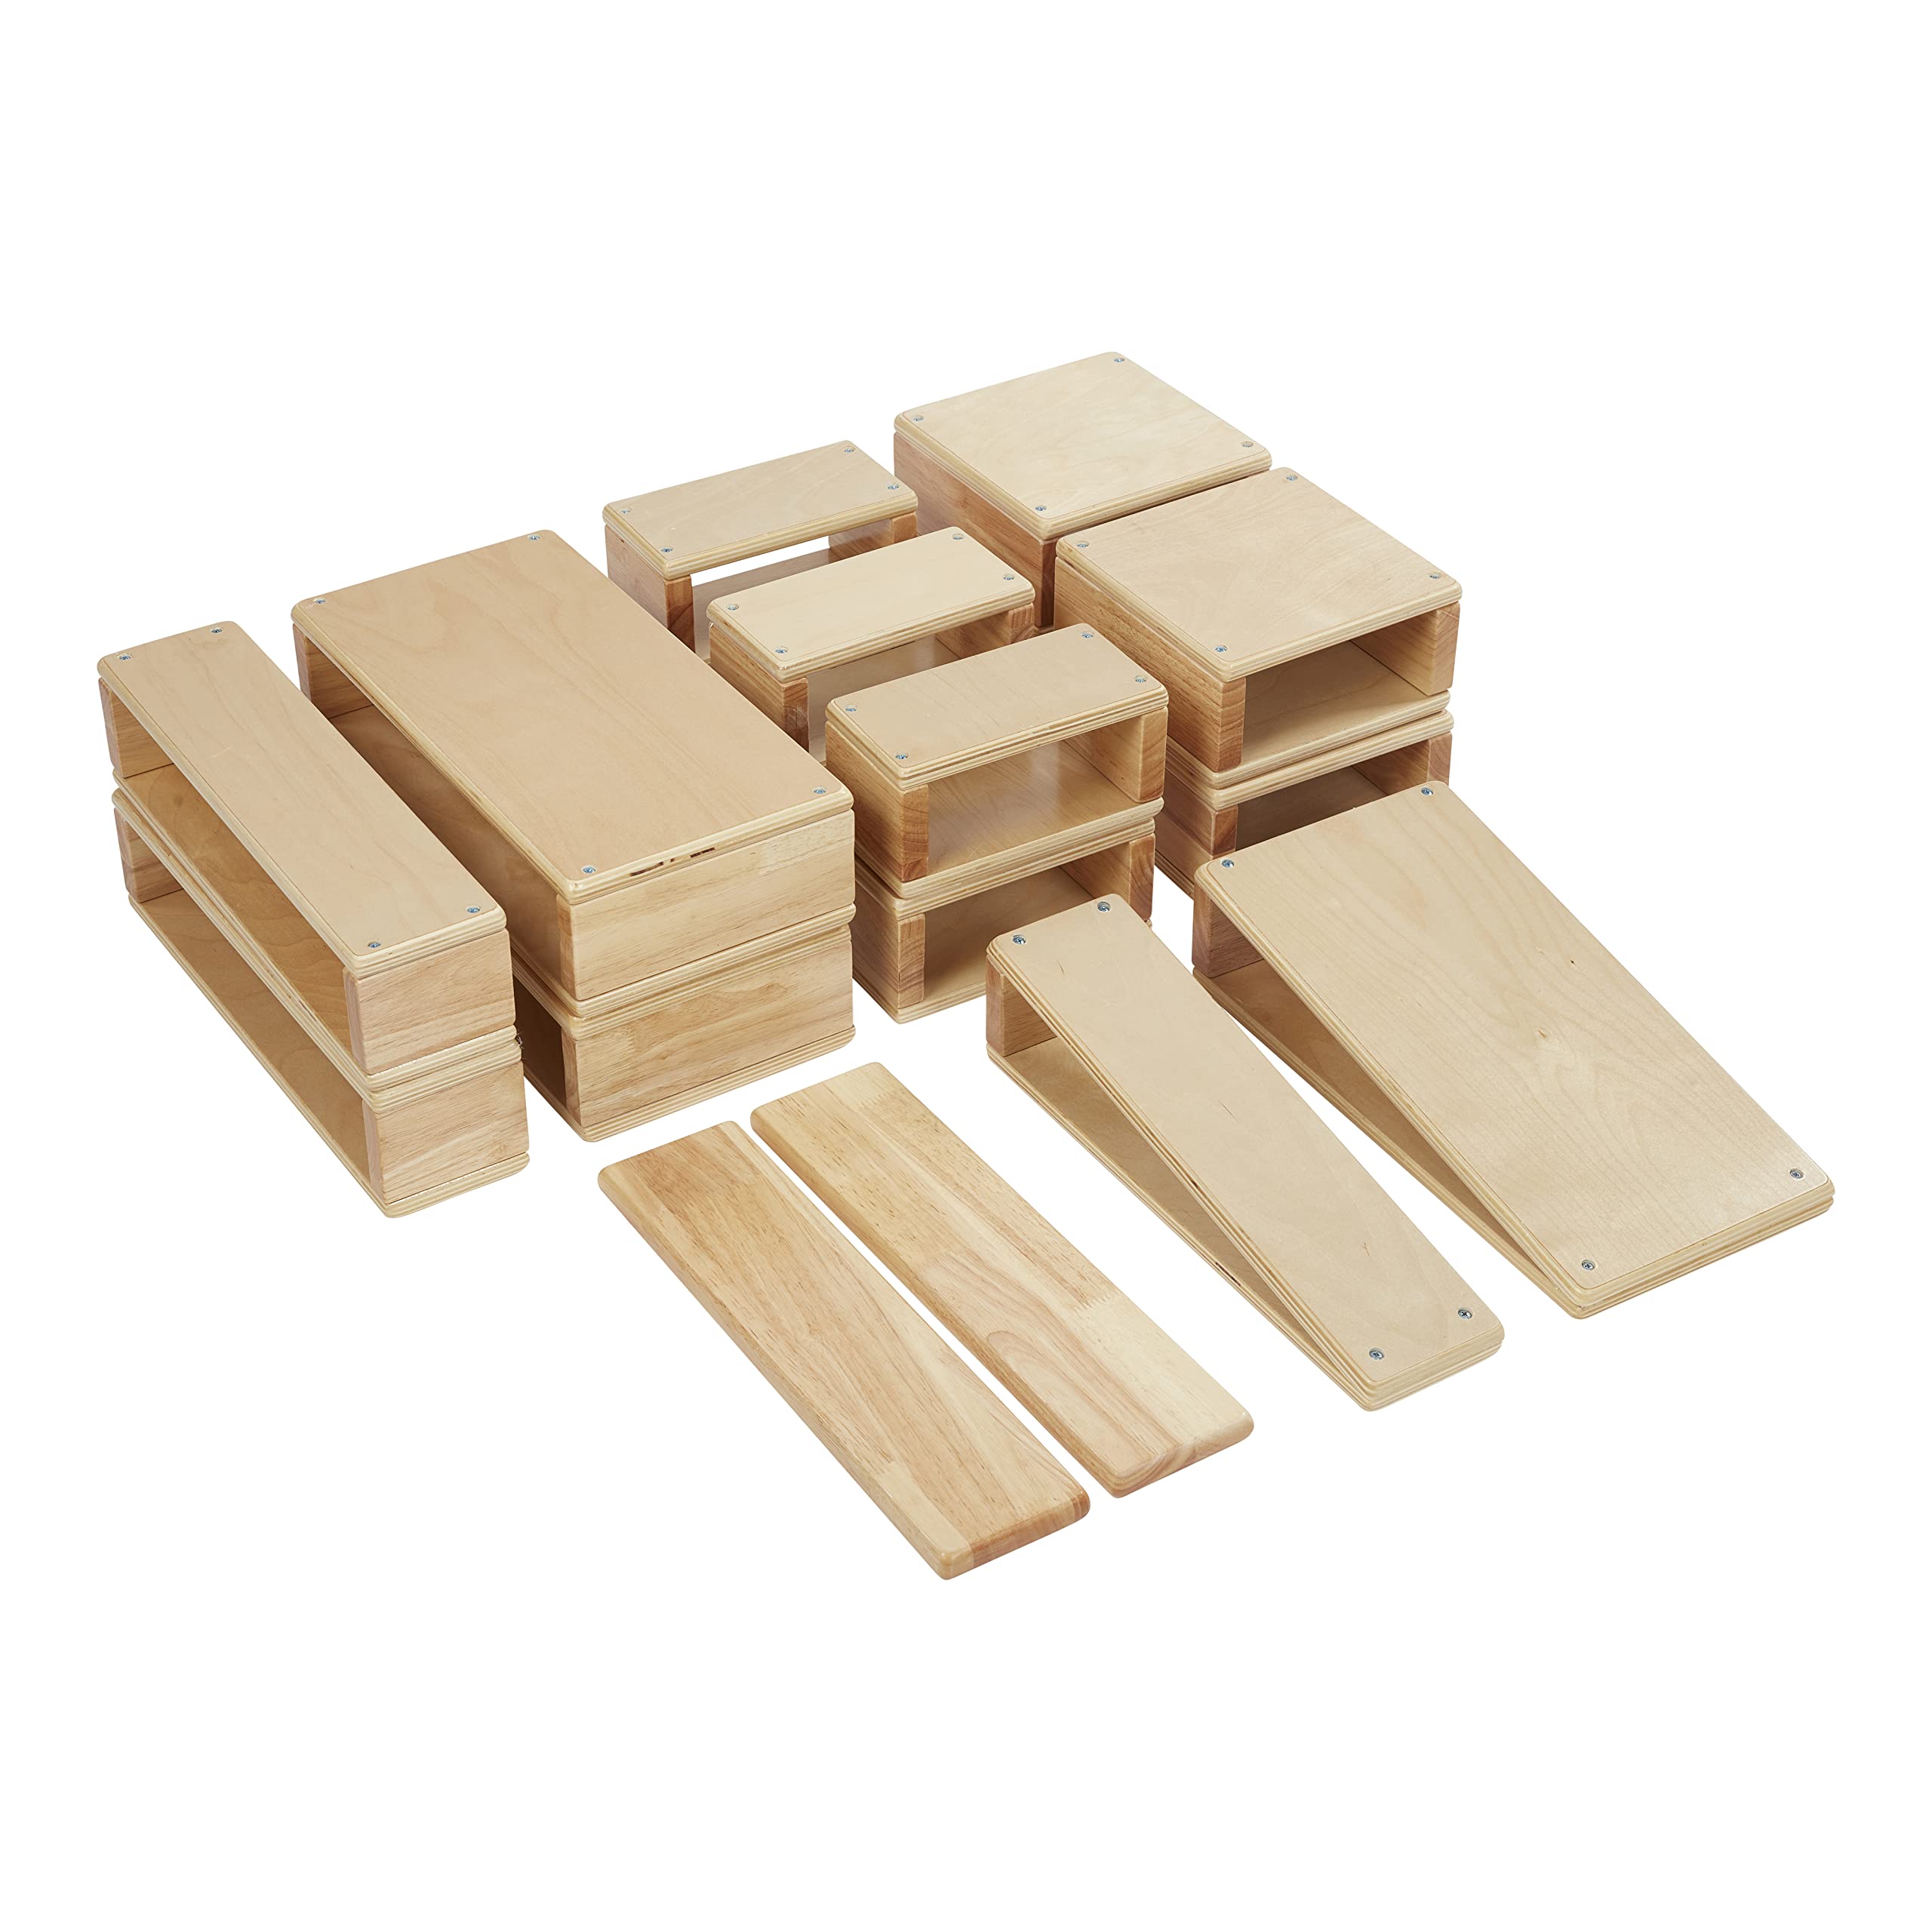 ECR4Kids Hollow Block Set, Wooden Toys, Natural, 18-Piece